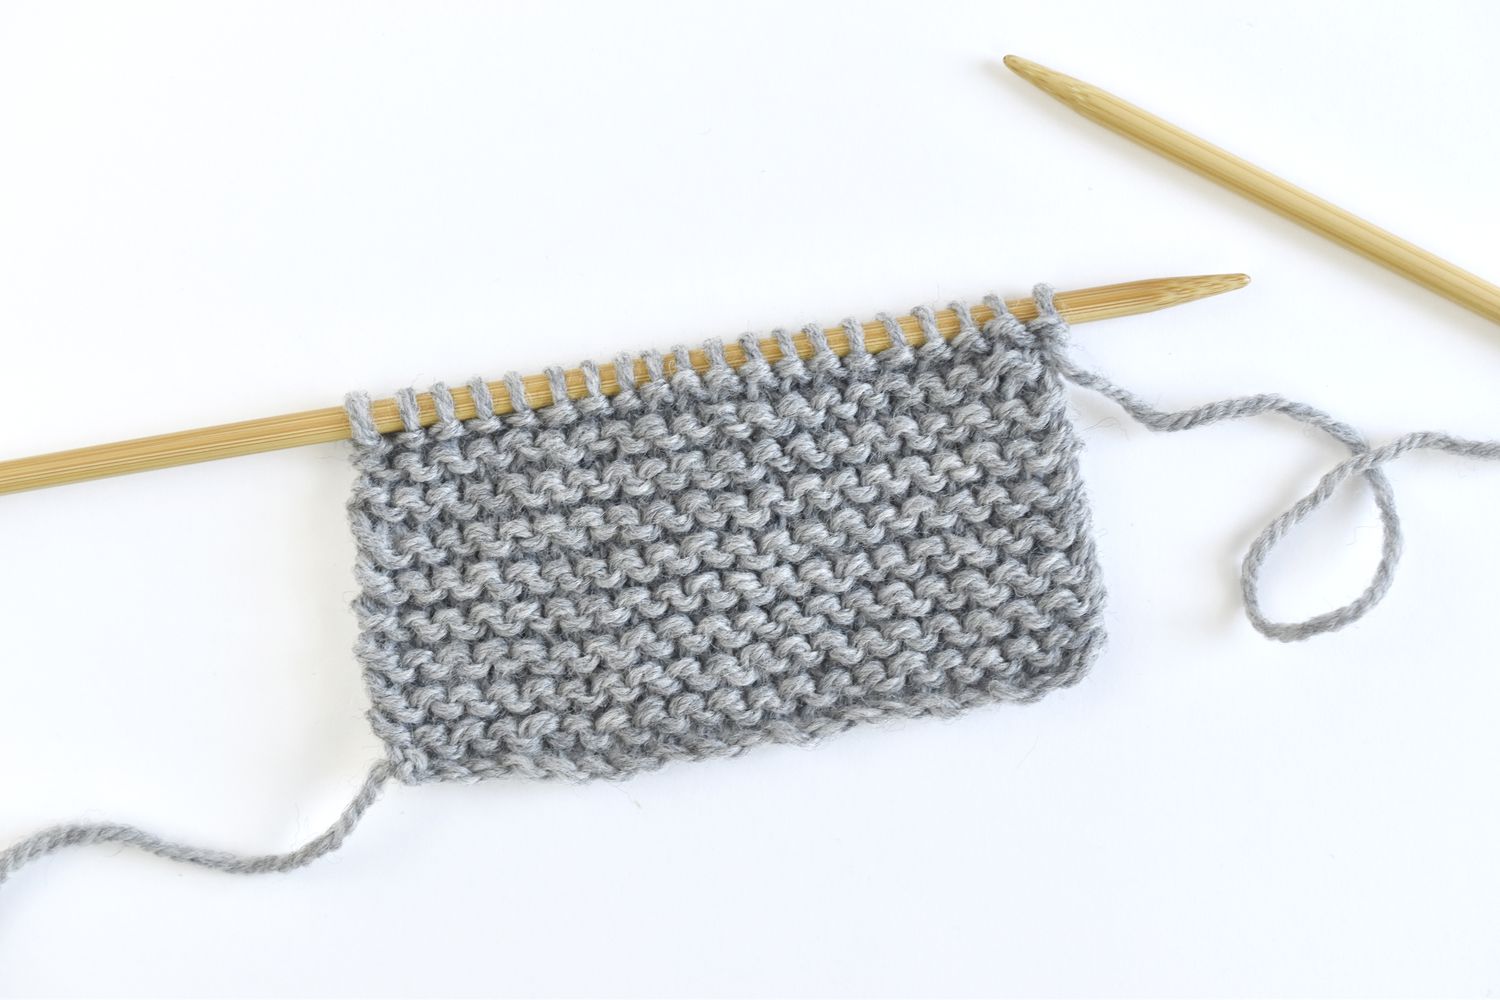 How to Work Garter Stitch in Knitting